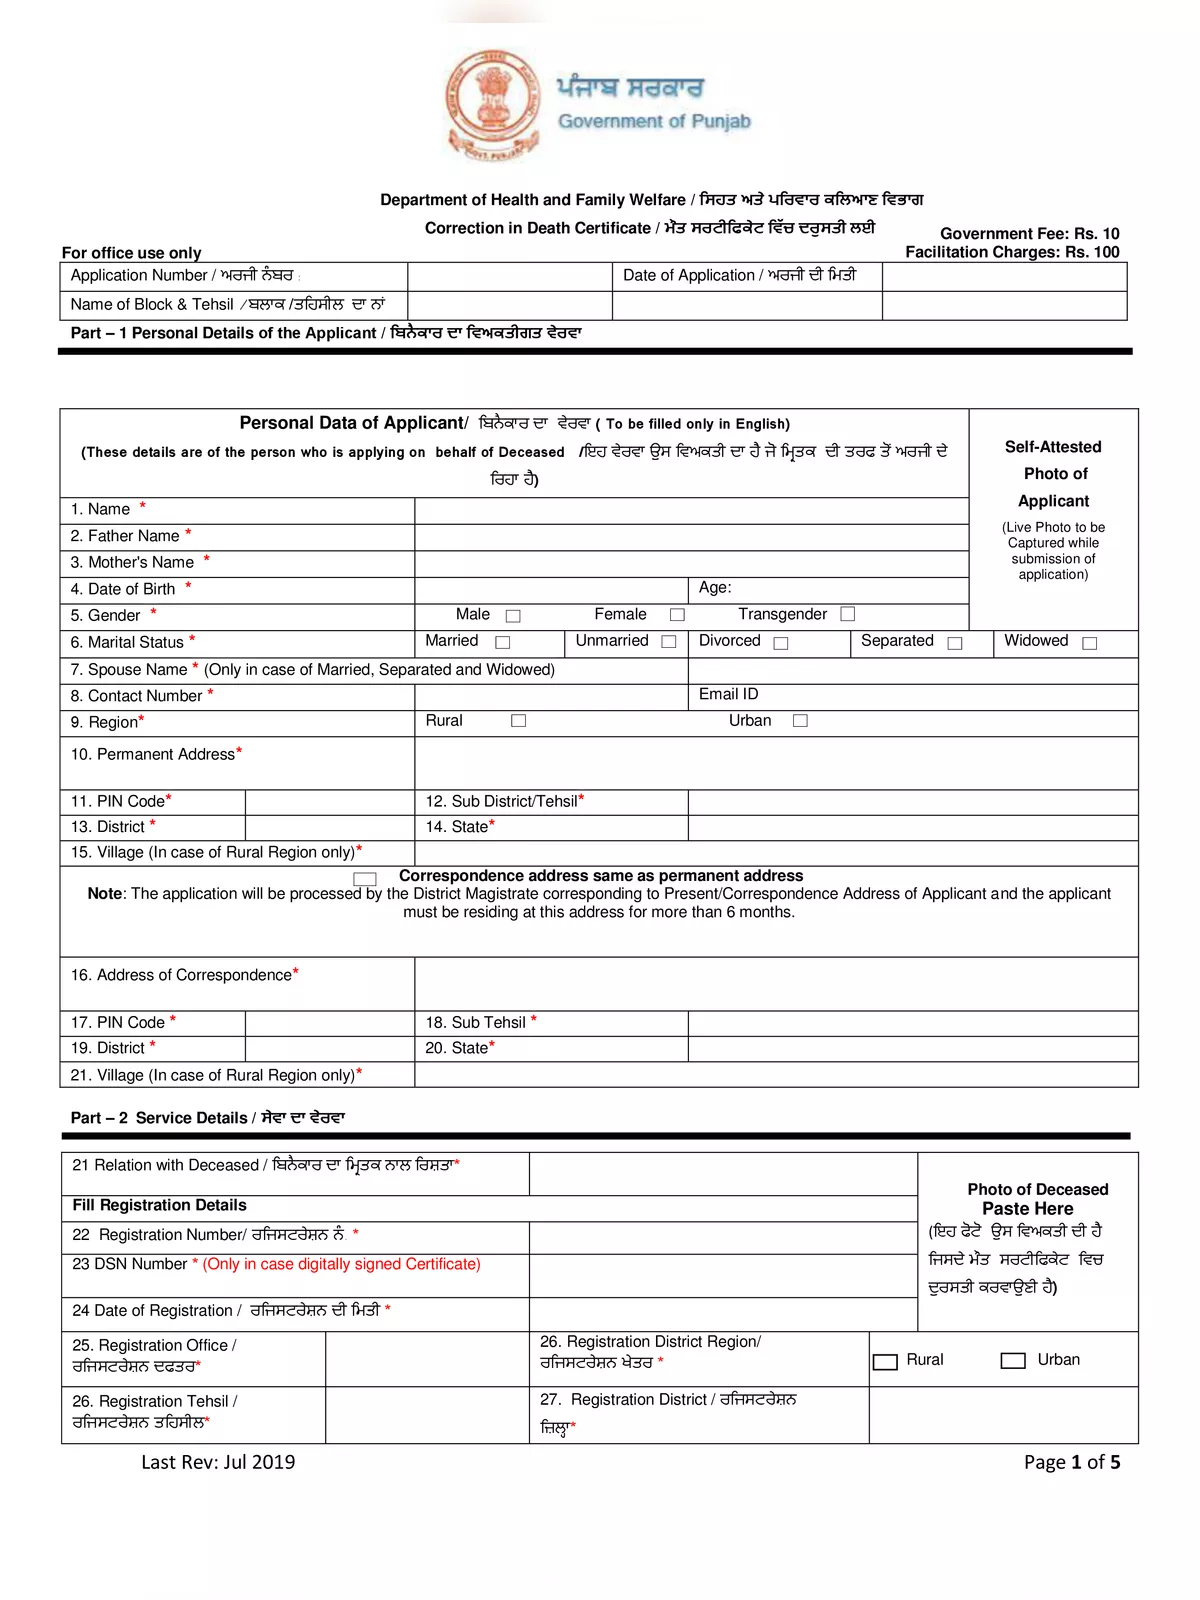 Punjab Death Certificate Correction Form